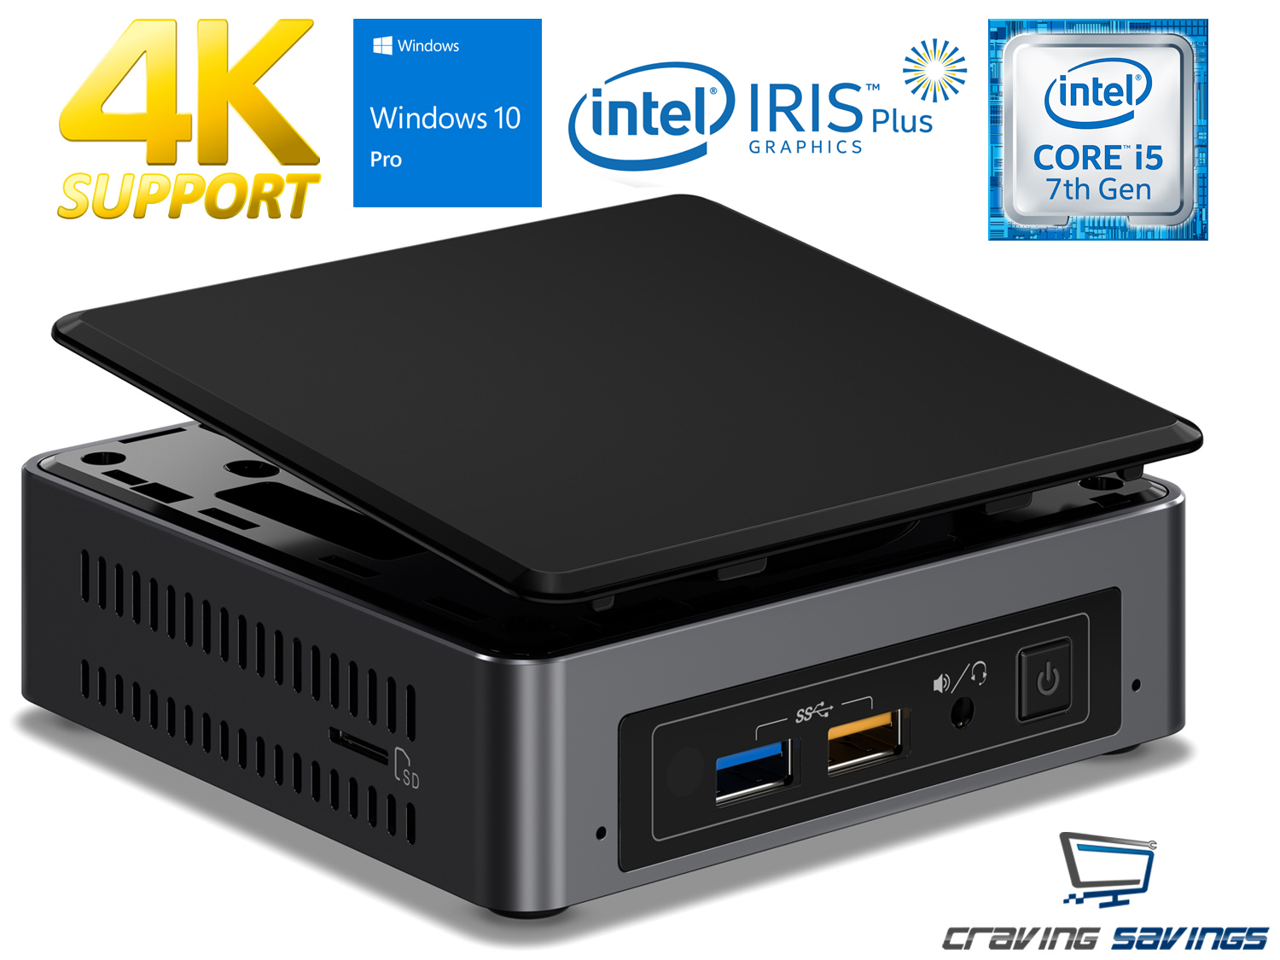 Intel NUC7i5BNK Mini PC, Intel Core i5-7260U 2.2GHz, 16GB DDR4, 512GB SSD, Wifi, BT 4.2, HDMI, Thunderbolt 3, 4k Support, Dual Monitor Capable, Windows 10 Pro